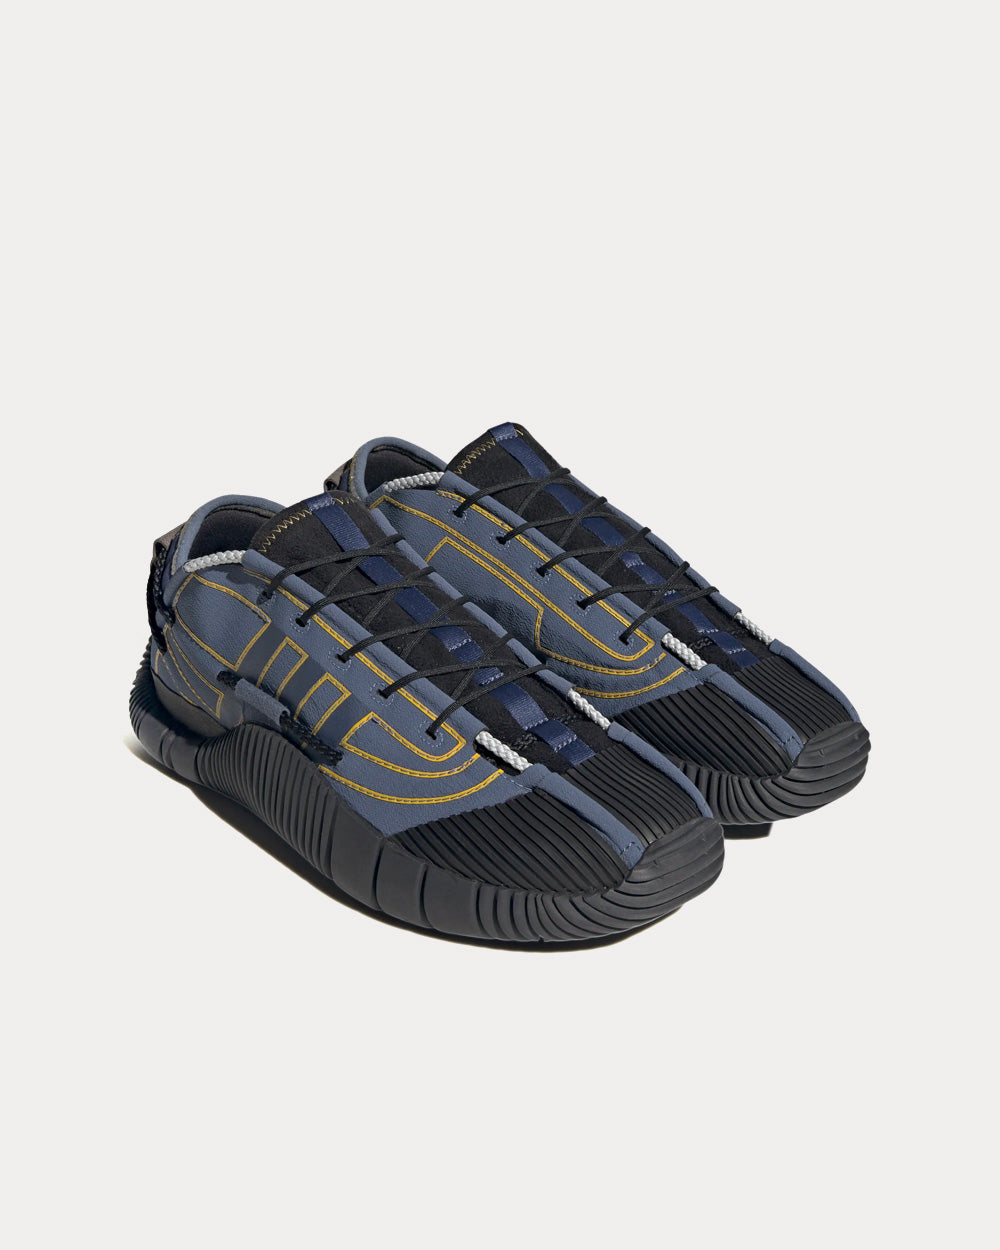 Adidas x Craig Green - Scuba Phormar Tech Ink Low Top Sneakers